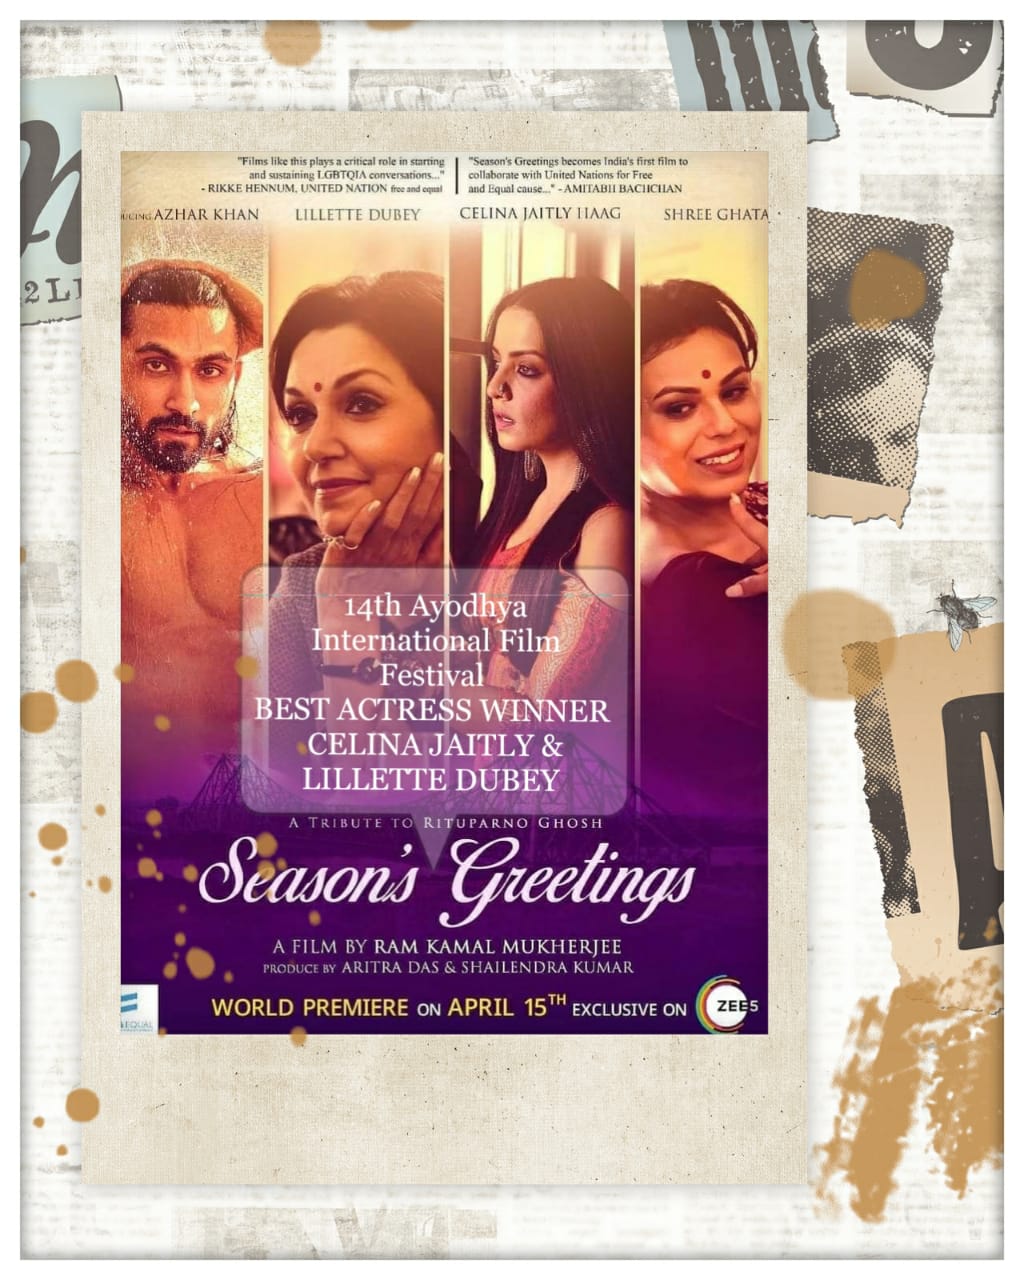 Good News: Director Ram Kamal's Season Greetings wins big once again